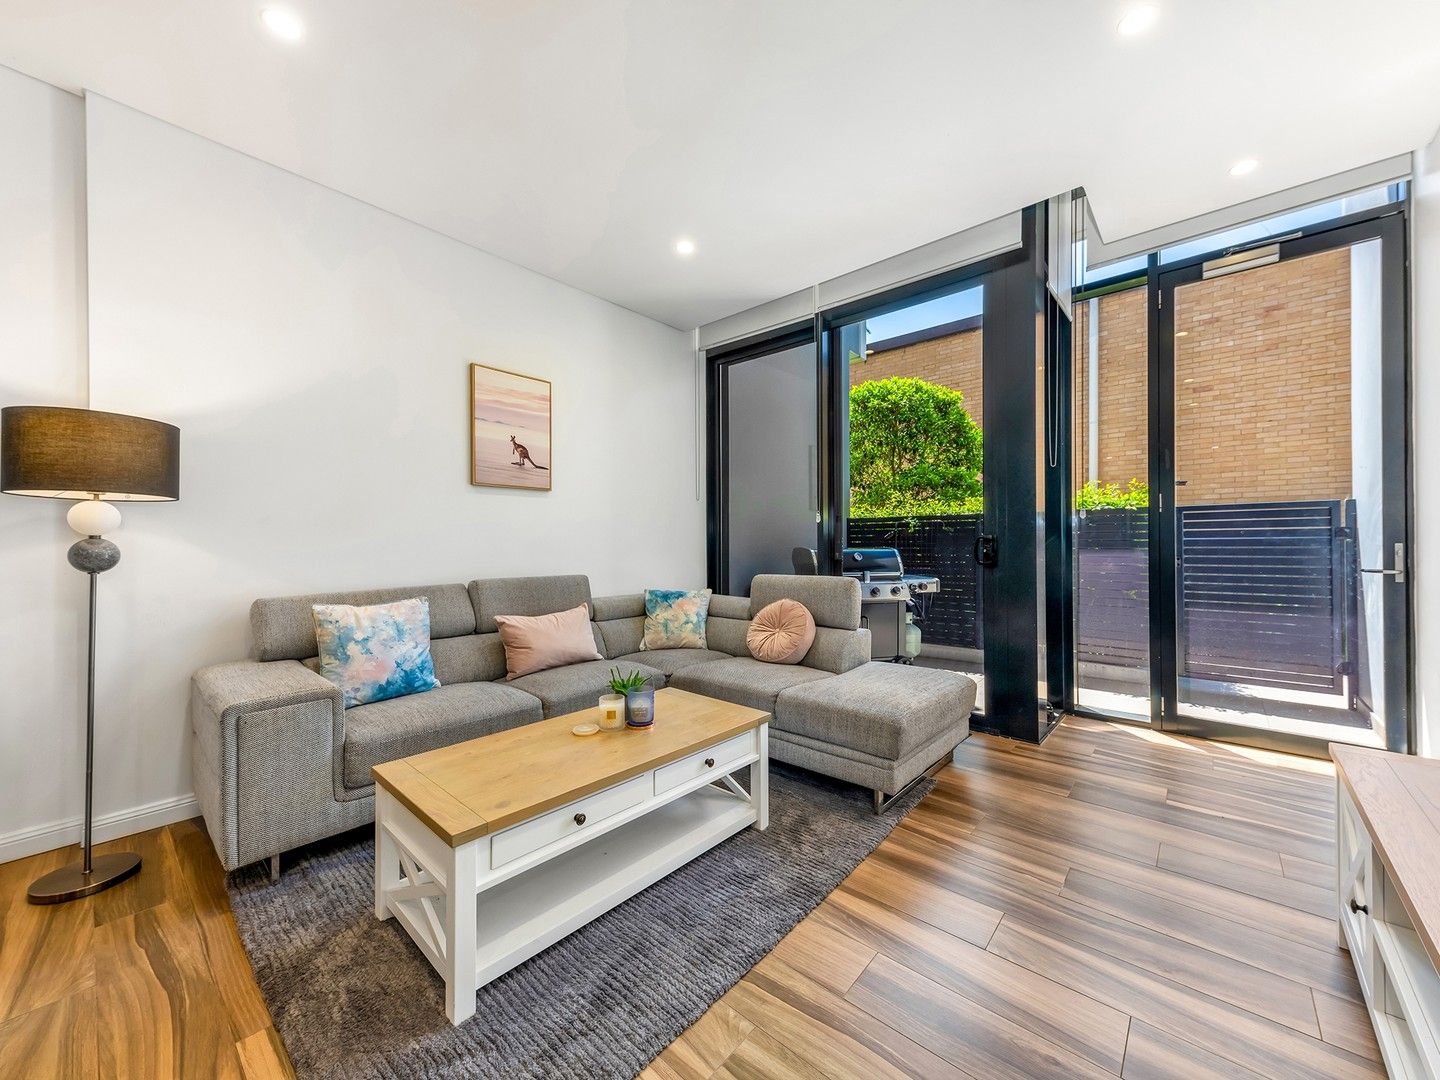 2 bedrooms Apartment / Unit / Flat in 37/42 Rosebery Avenue ROSEBERY NSW, 2018